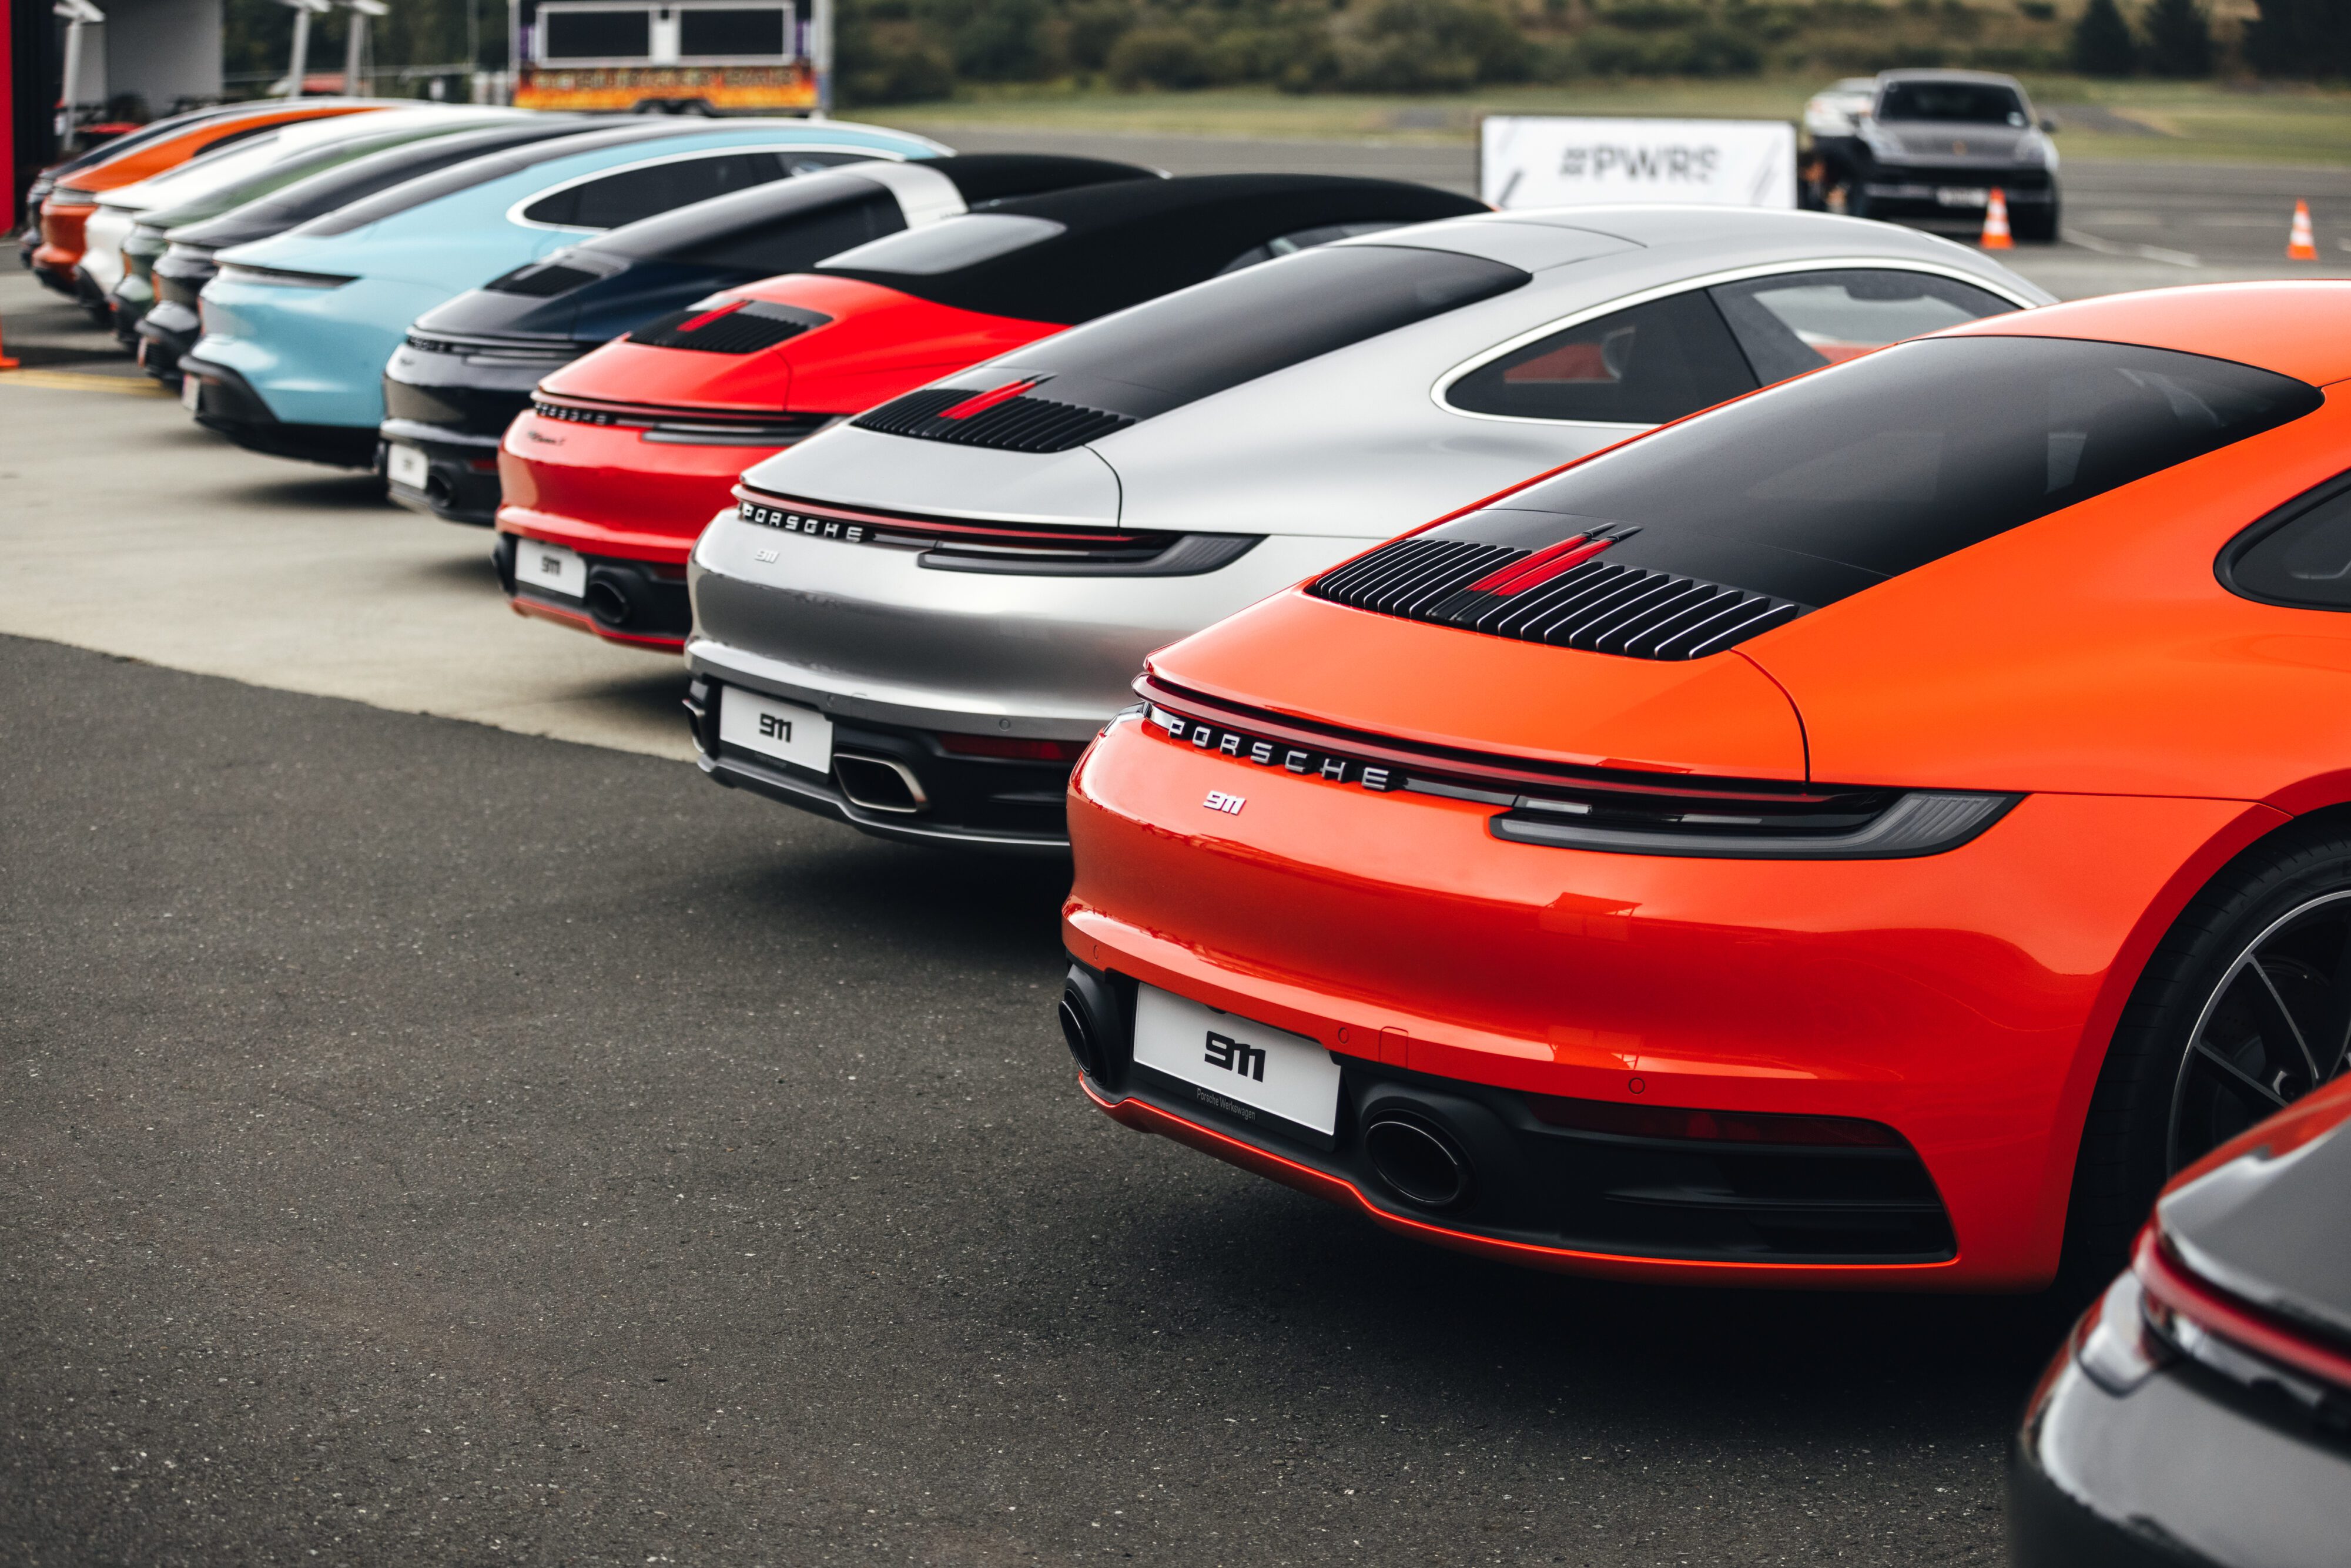 Porsche World Roadshow